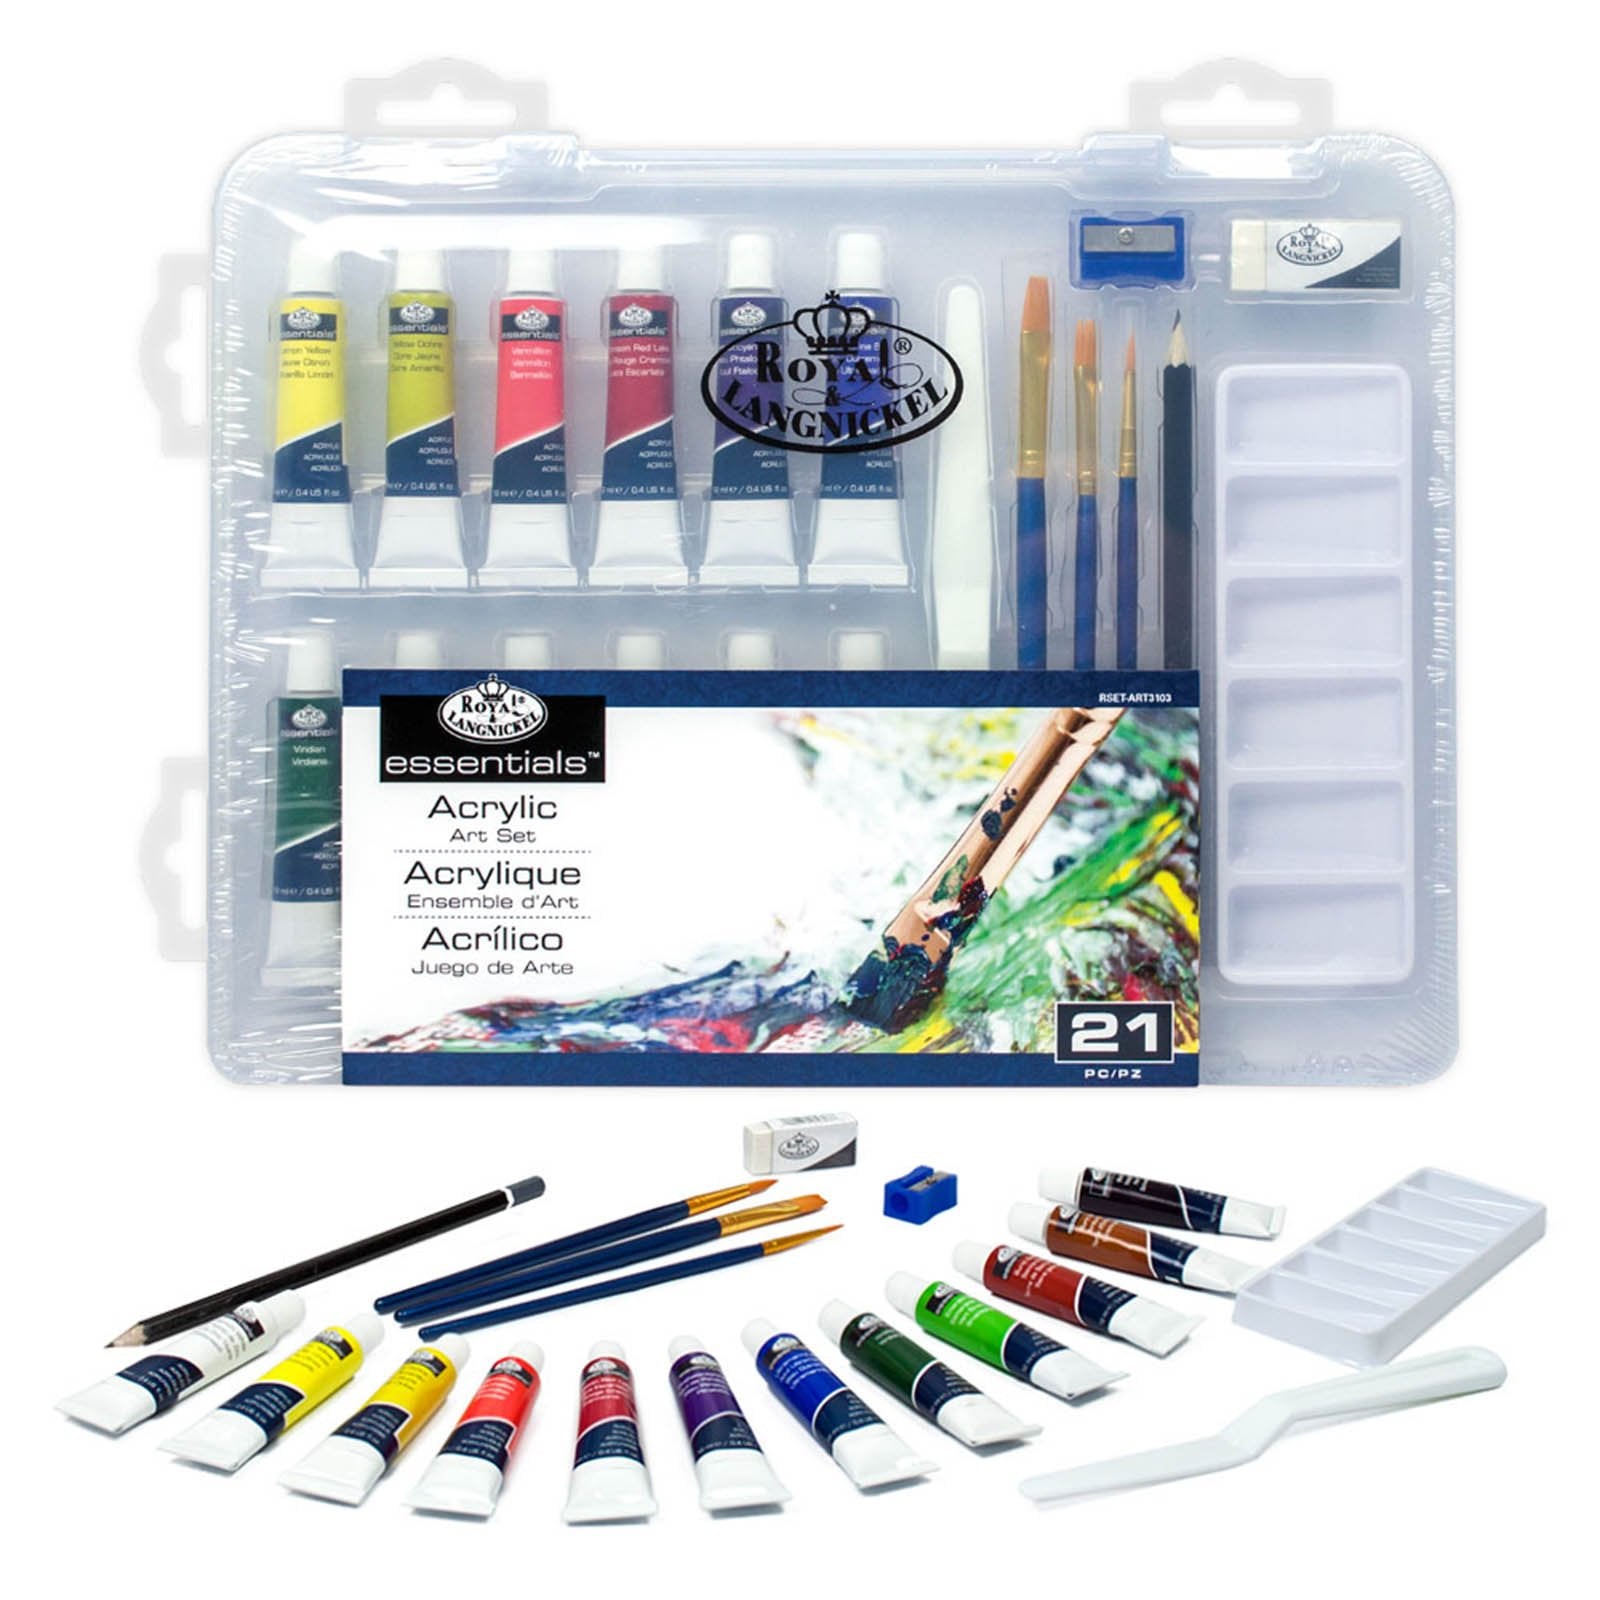 Sketching - Essentials Artist Set - Royal Brush